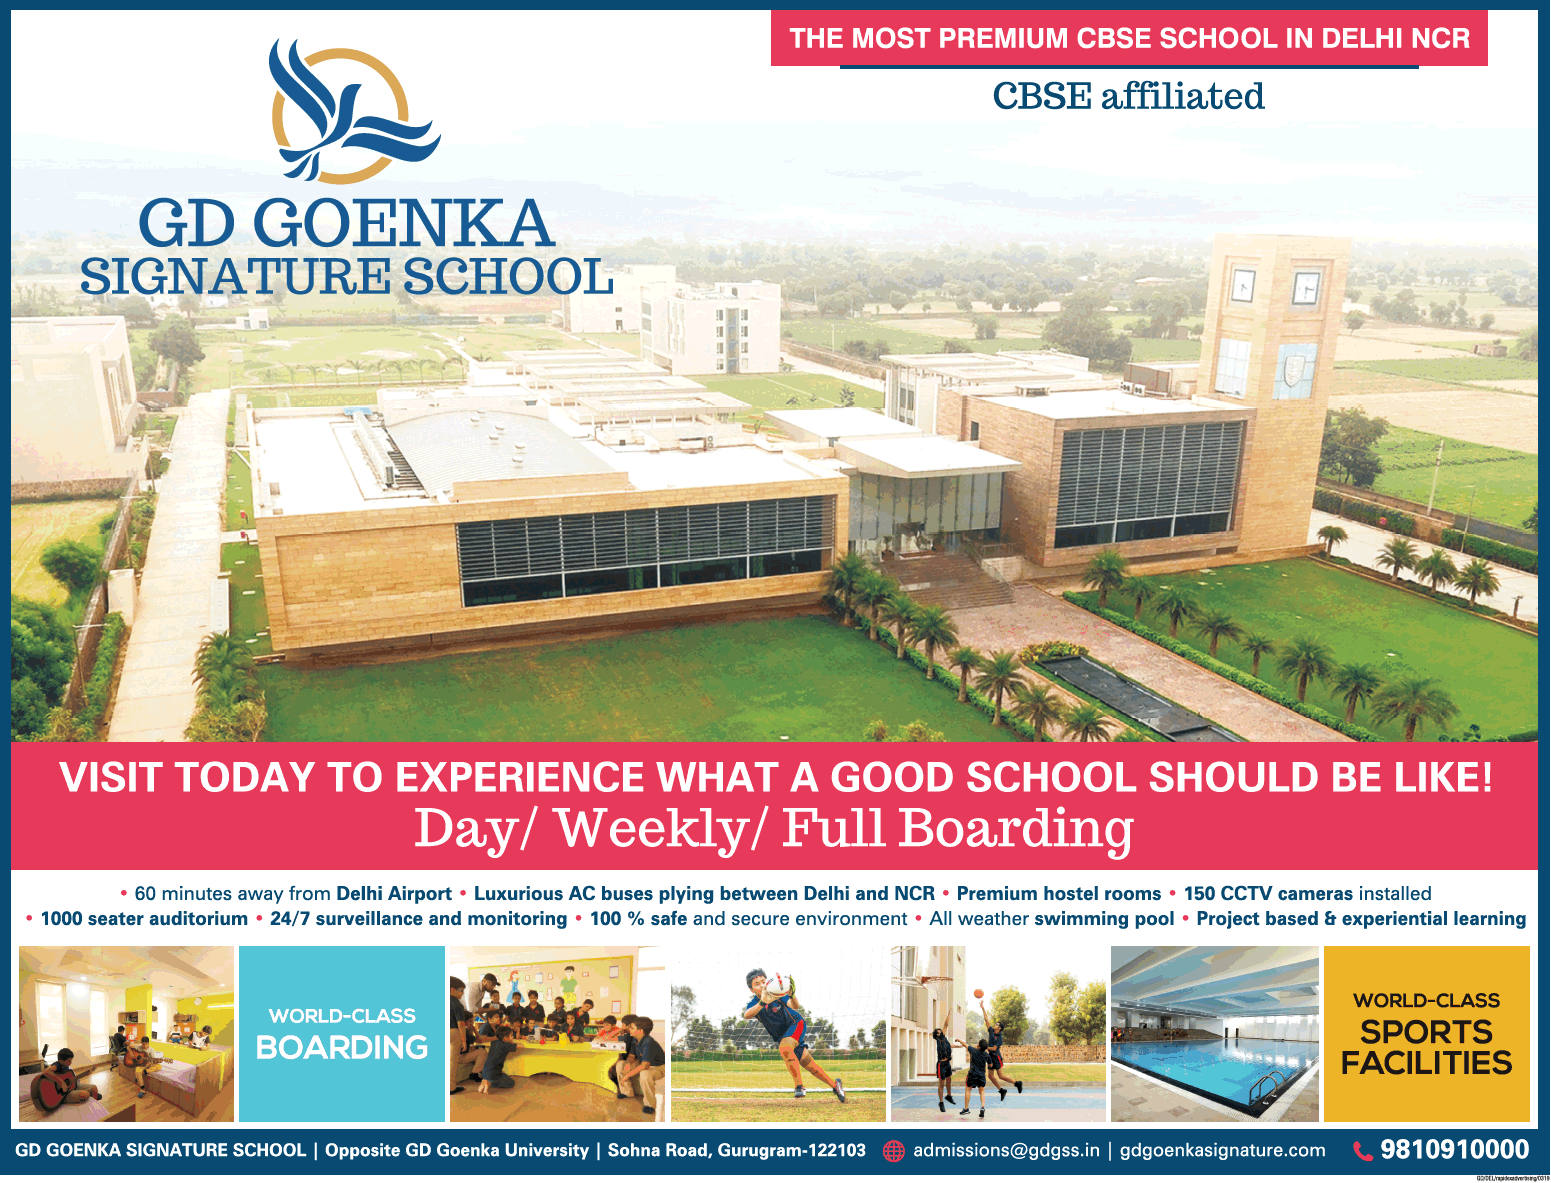 gd-goenka-signature-school-the-most-premium-cbse-school-in-delhi-ncr-cbse-affiliated-ad-delhi-times-14-03-2019.png